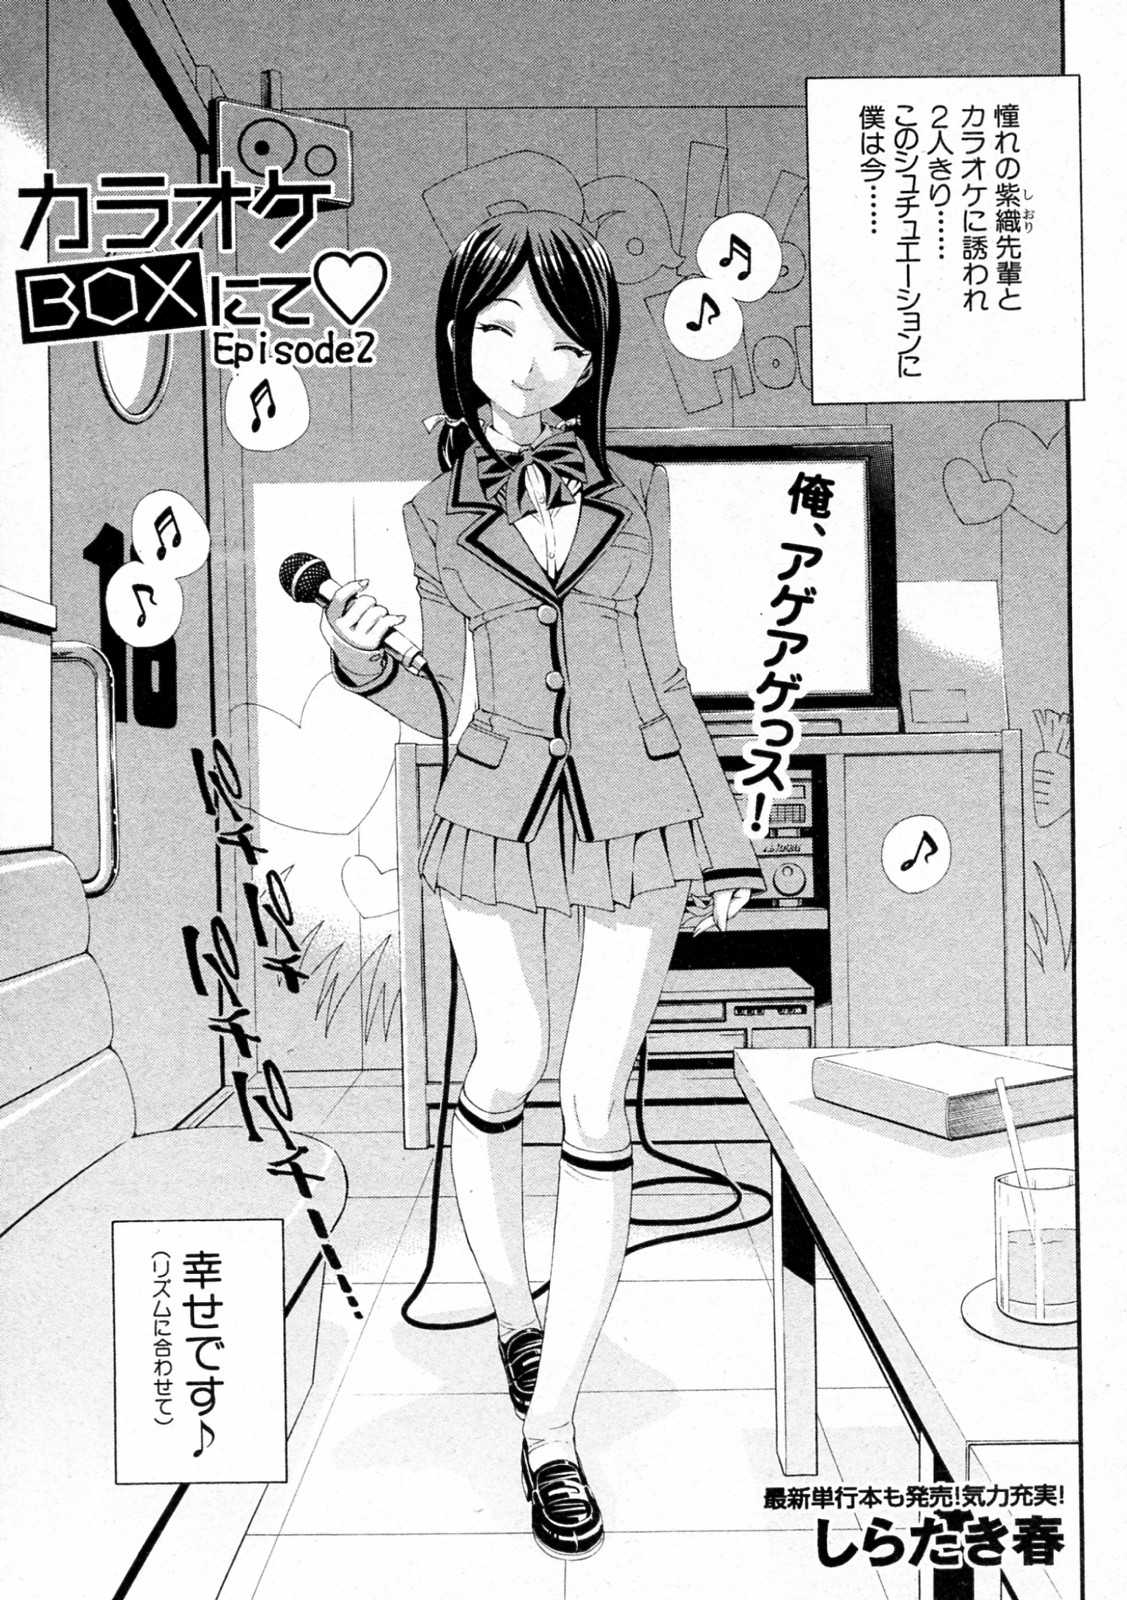 [Shirataki Shun] Karaoke Box nite (Complete) [しらたき春] カラオケBOXにて 全5話